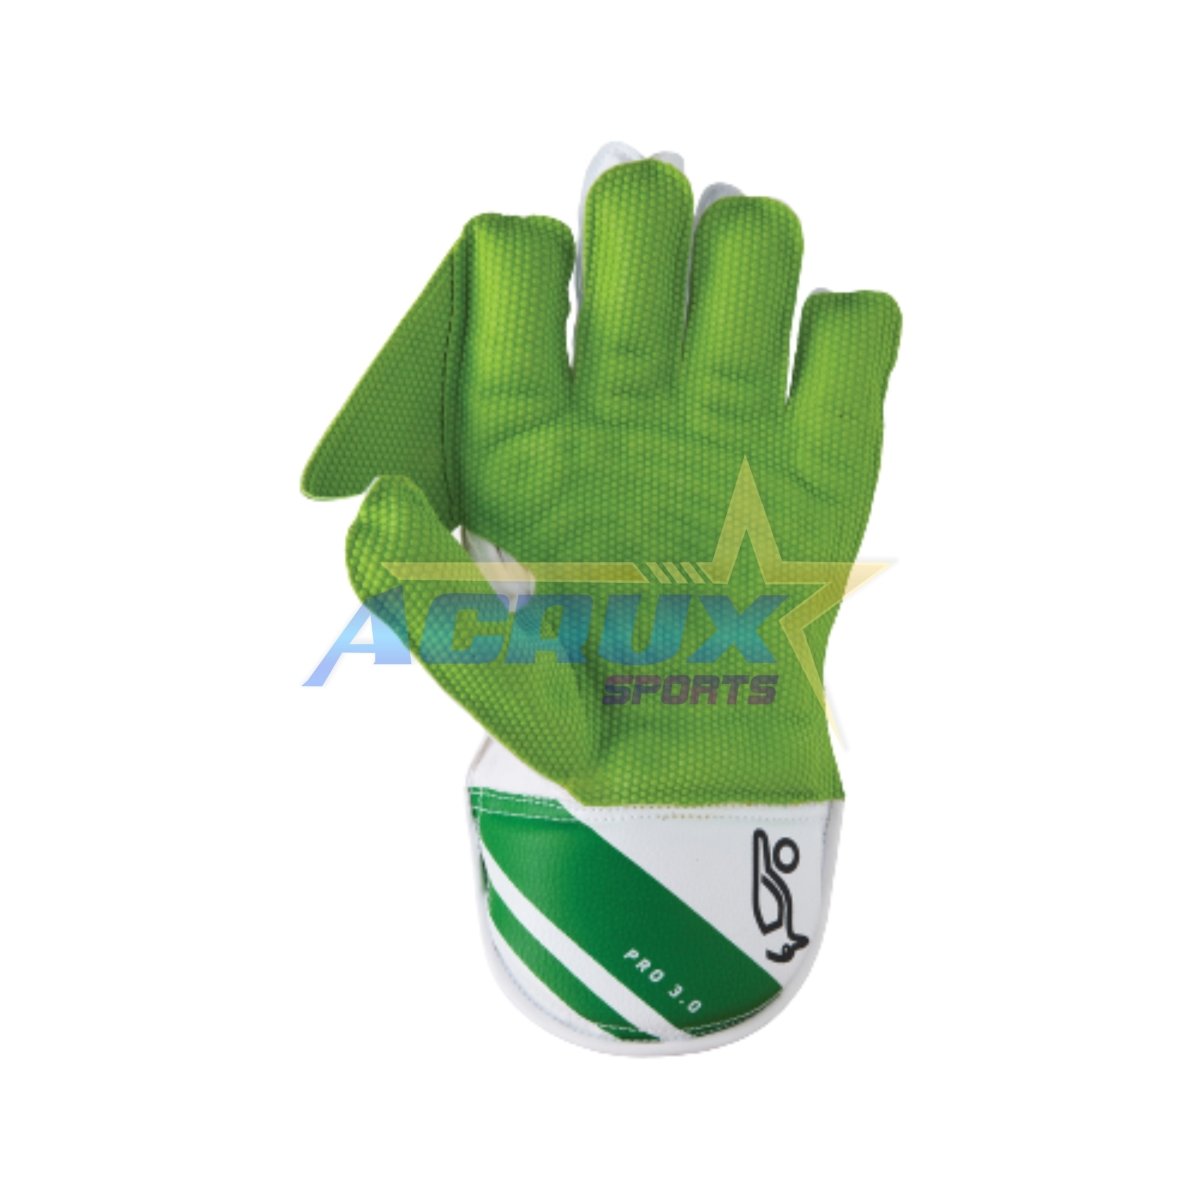 Kookaburra Kahuna Pro 3.0 Cricket Wicket Keeping Gloves Junior